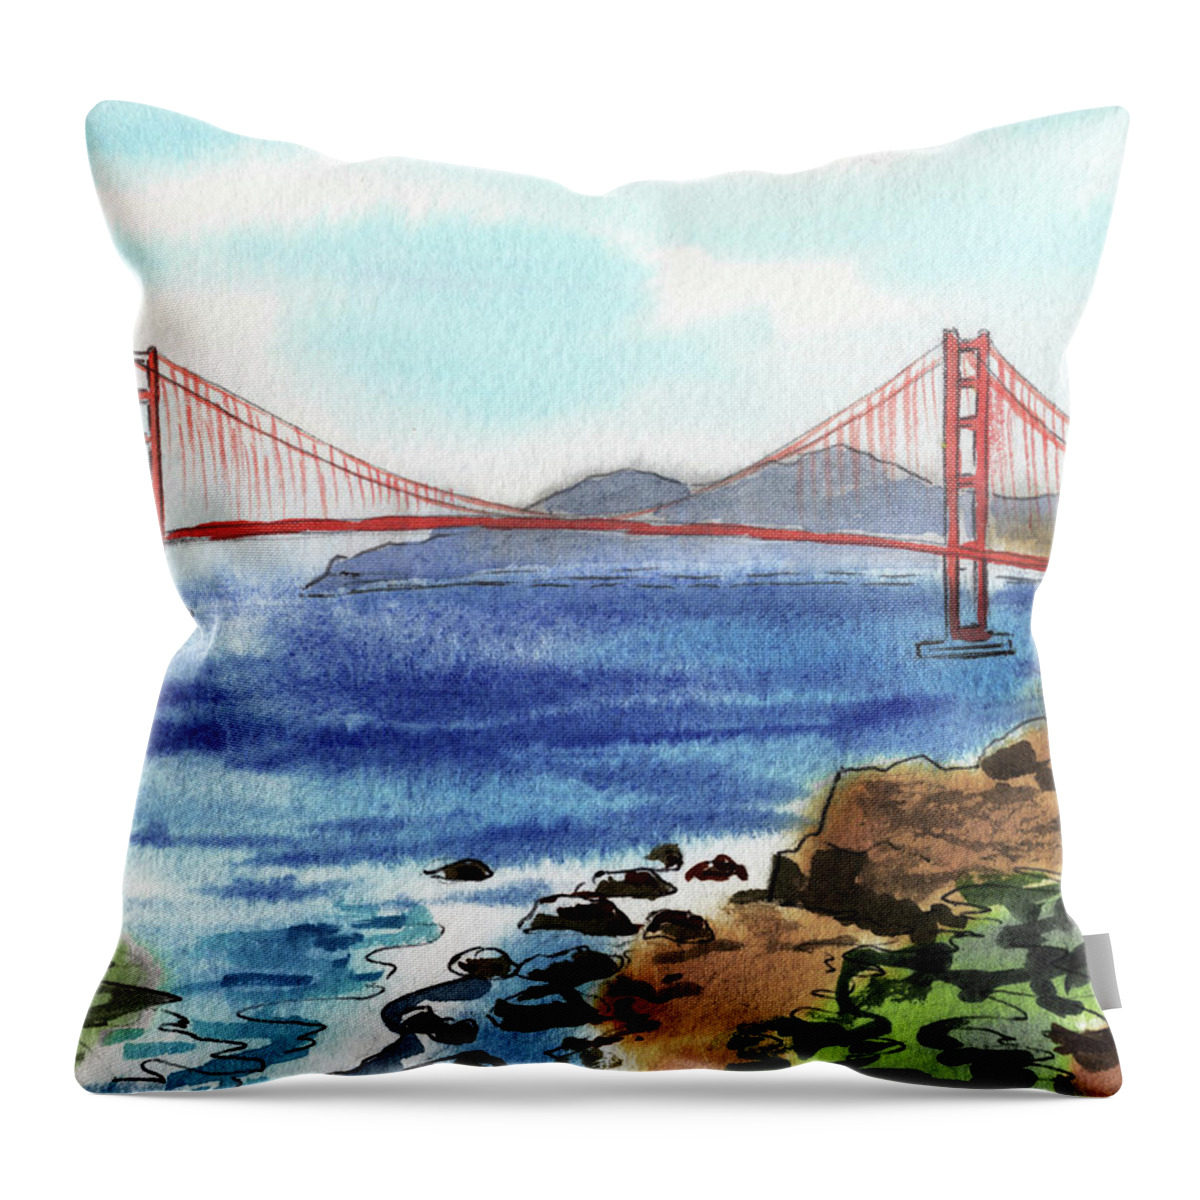 Bridge Throw Pillow featuring the painting Beautiful Golden Gate Bridge San Francisco Bay Watercolor by Irina Sztukowski